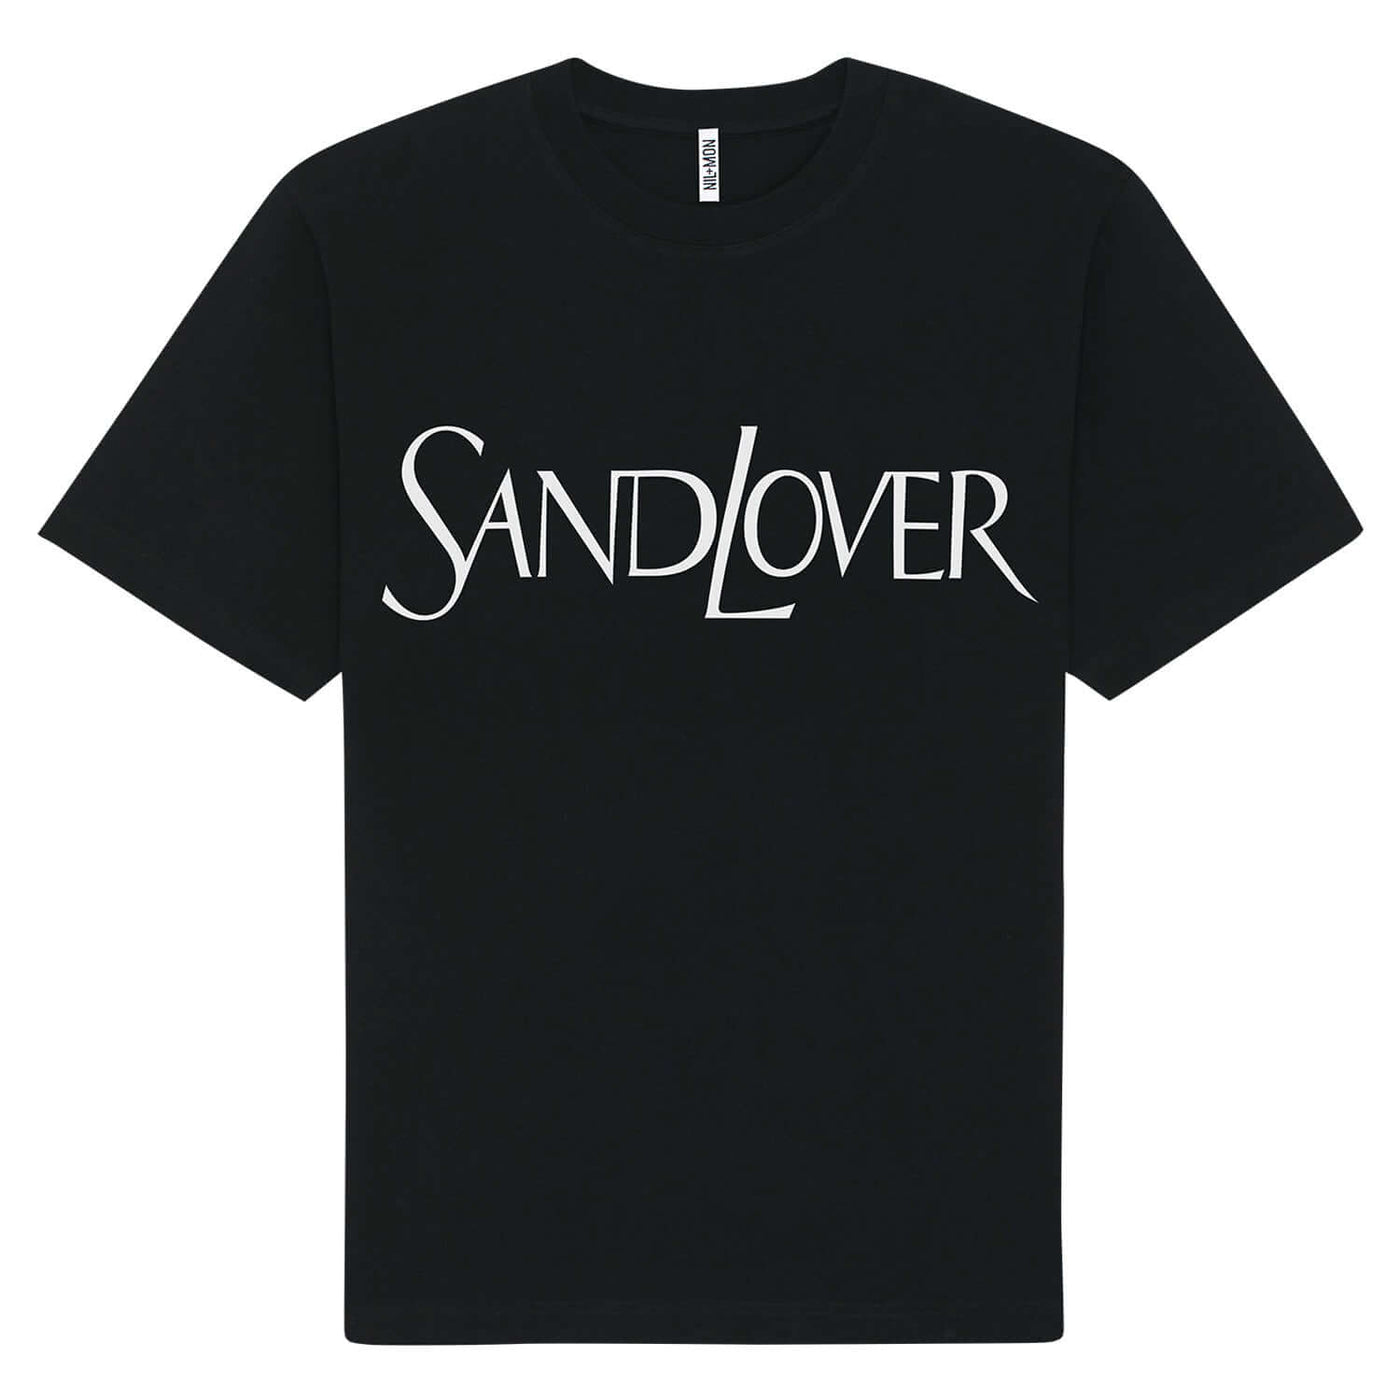 XXL Beach Shirt "Sandlover" - black